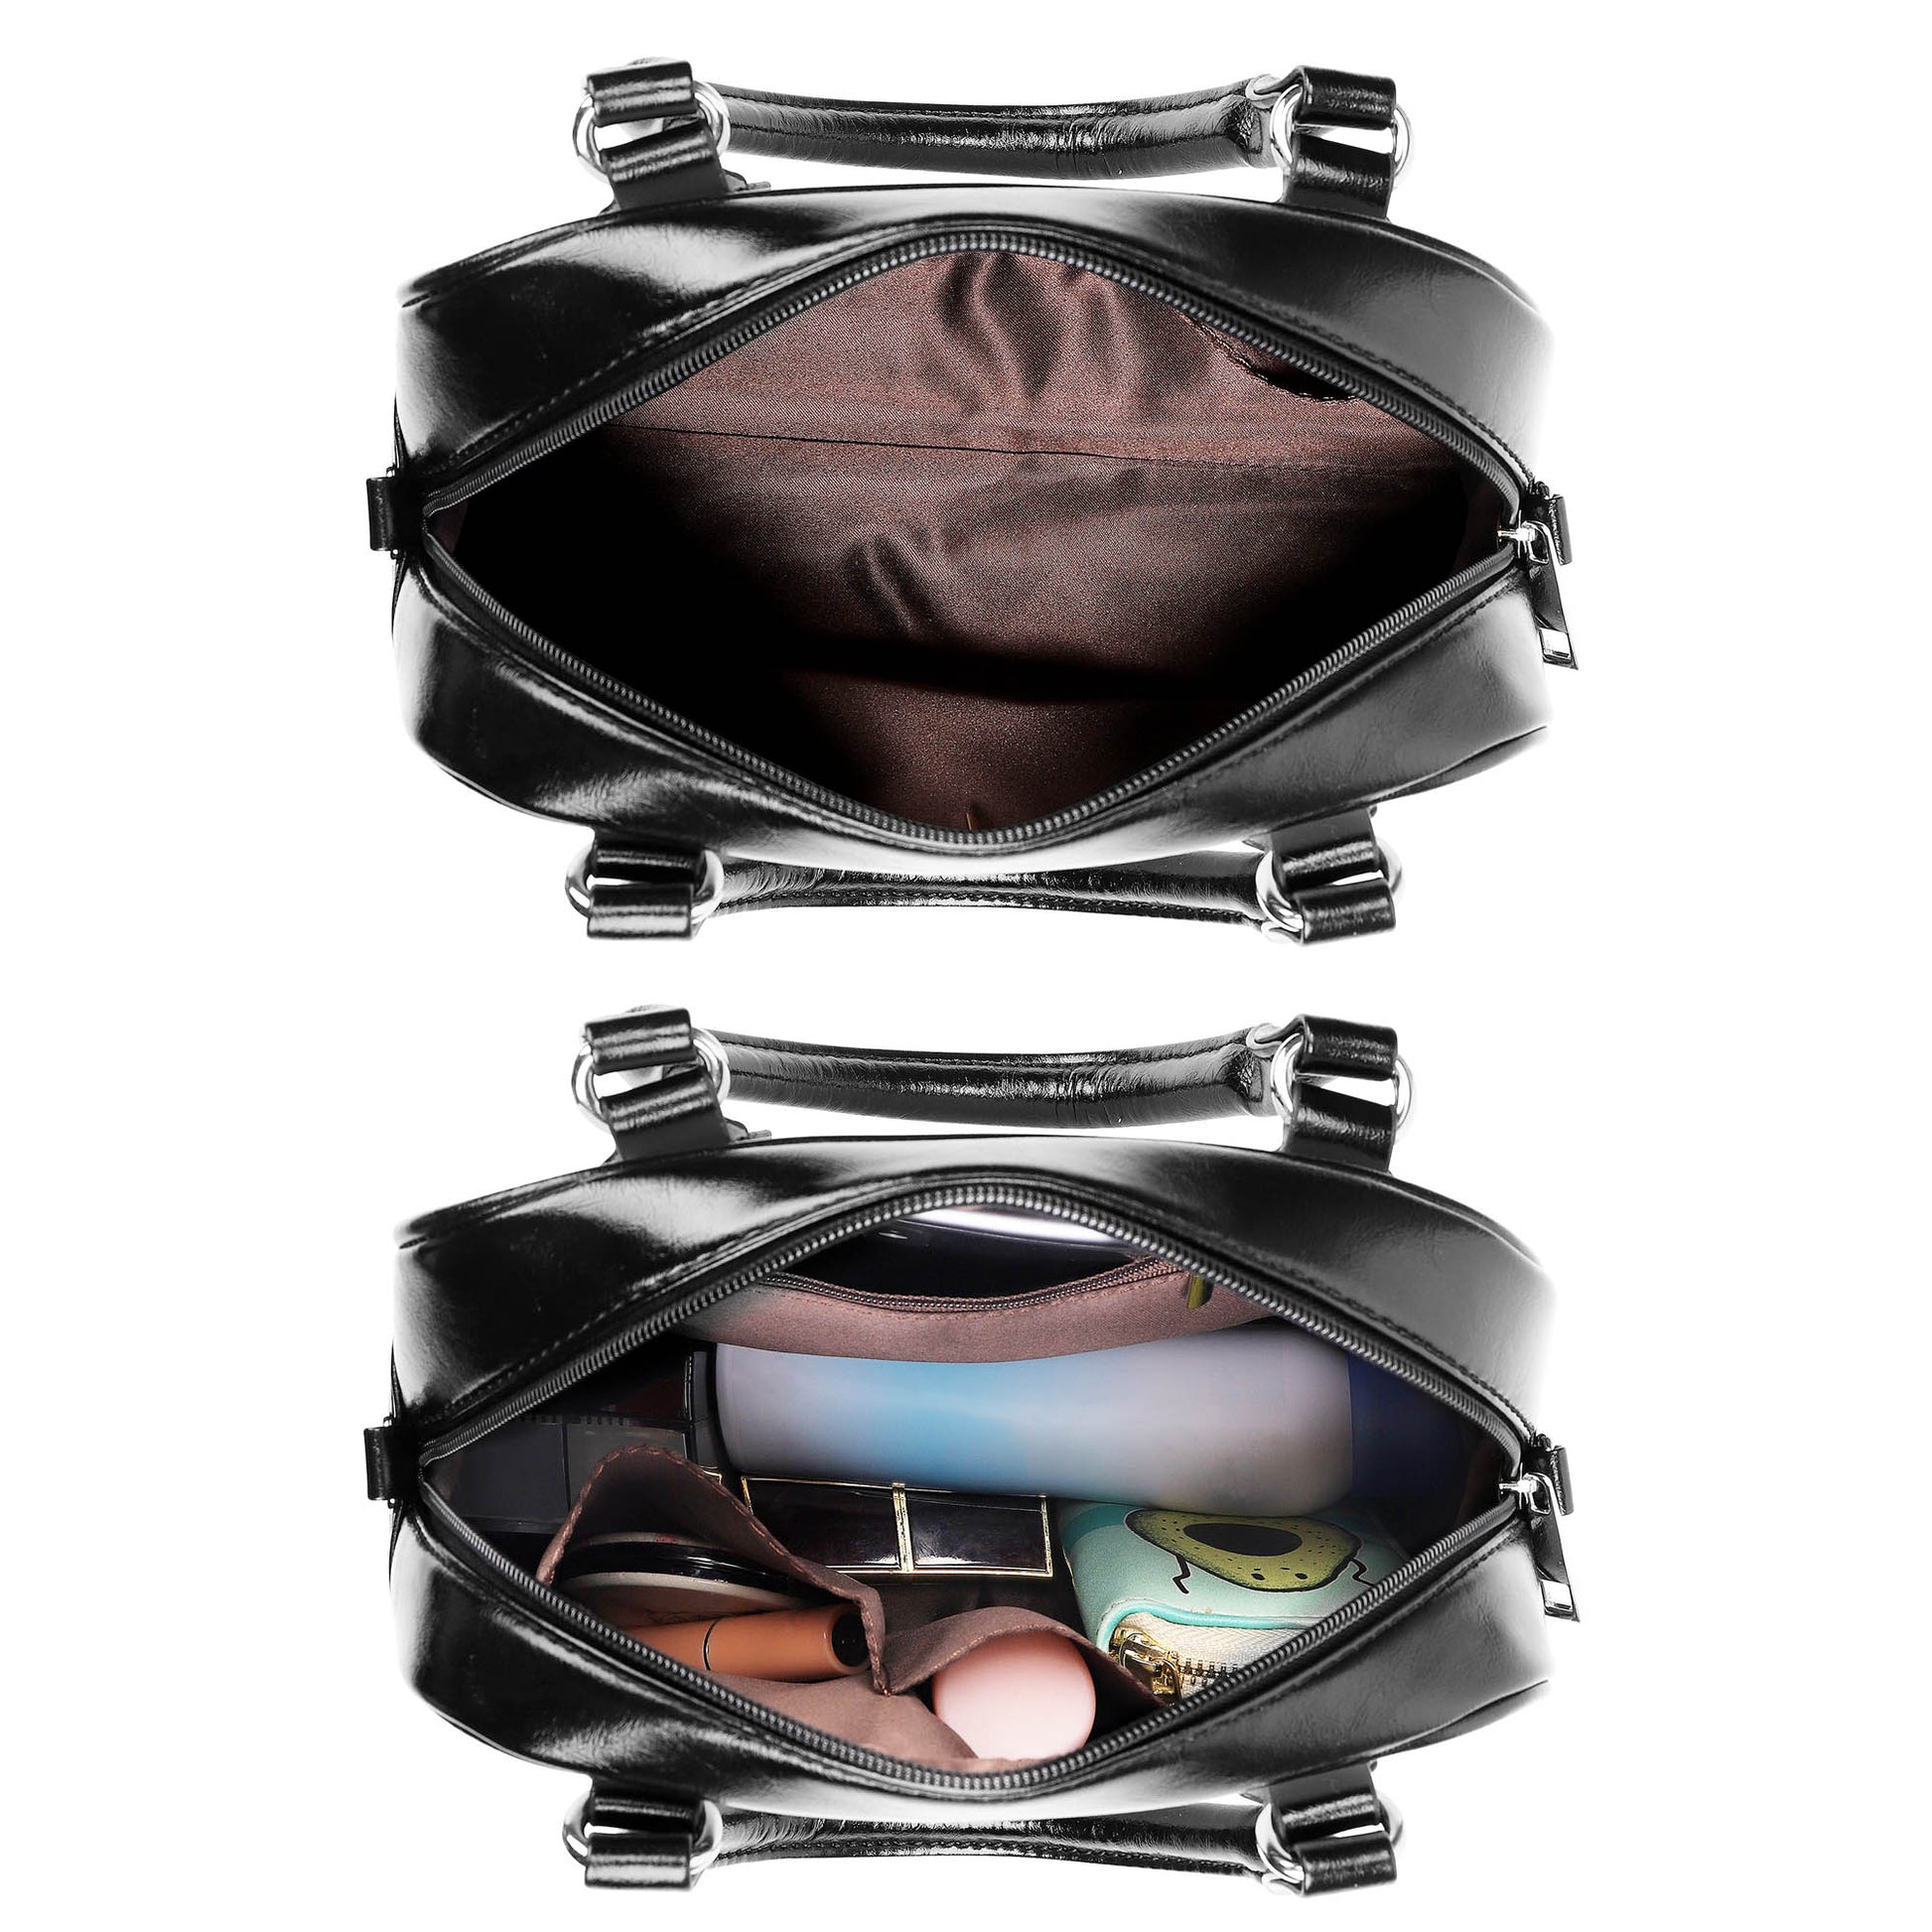 Moncrieff Modern Tartan Shoulder Handbags with Family Crest - Tartanvibesclothing